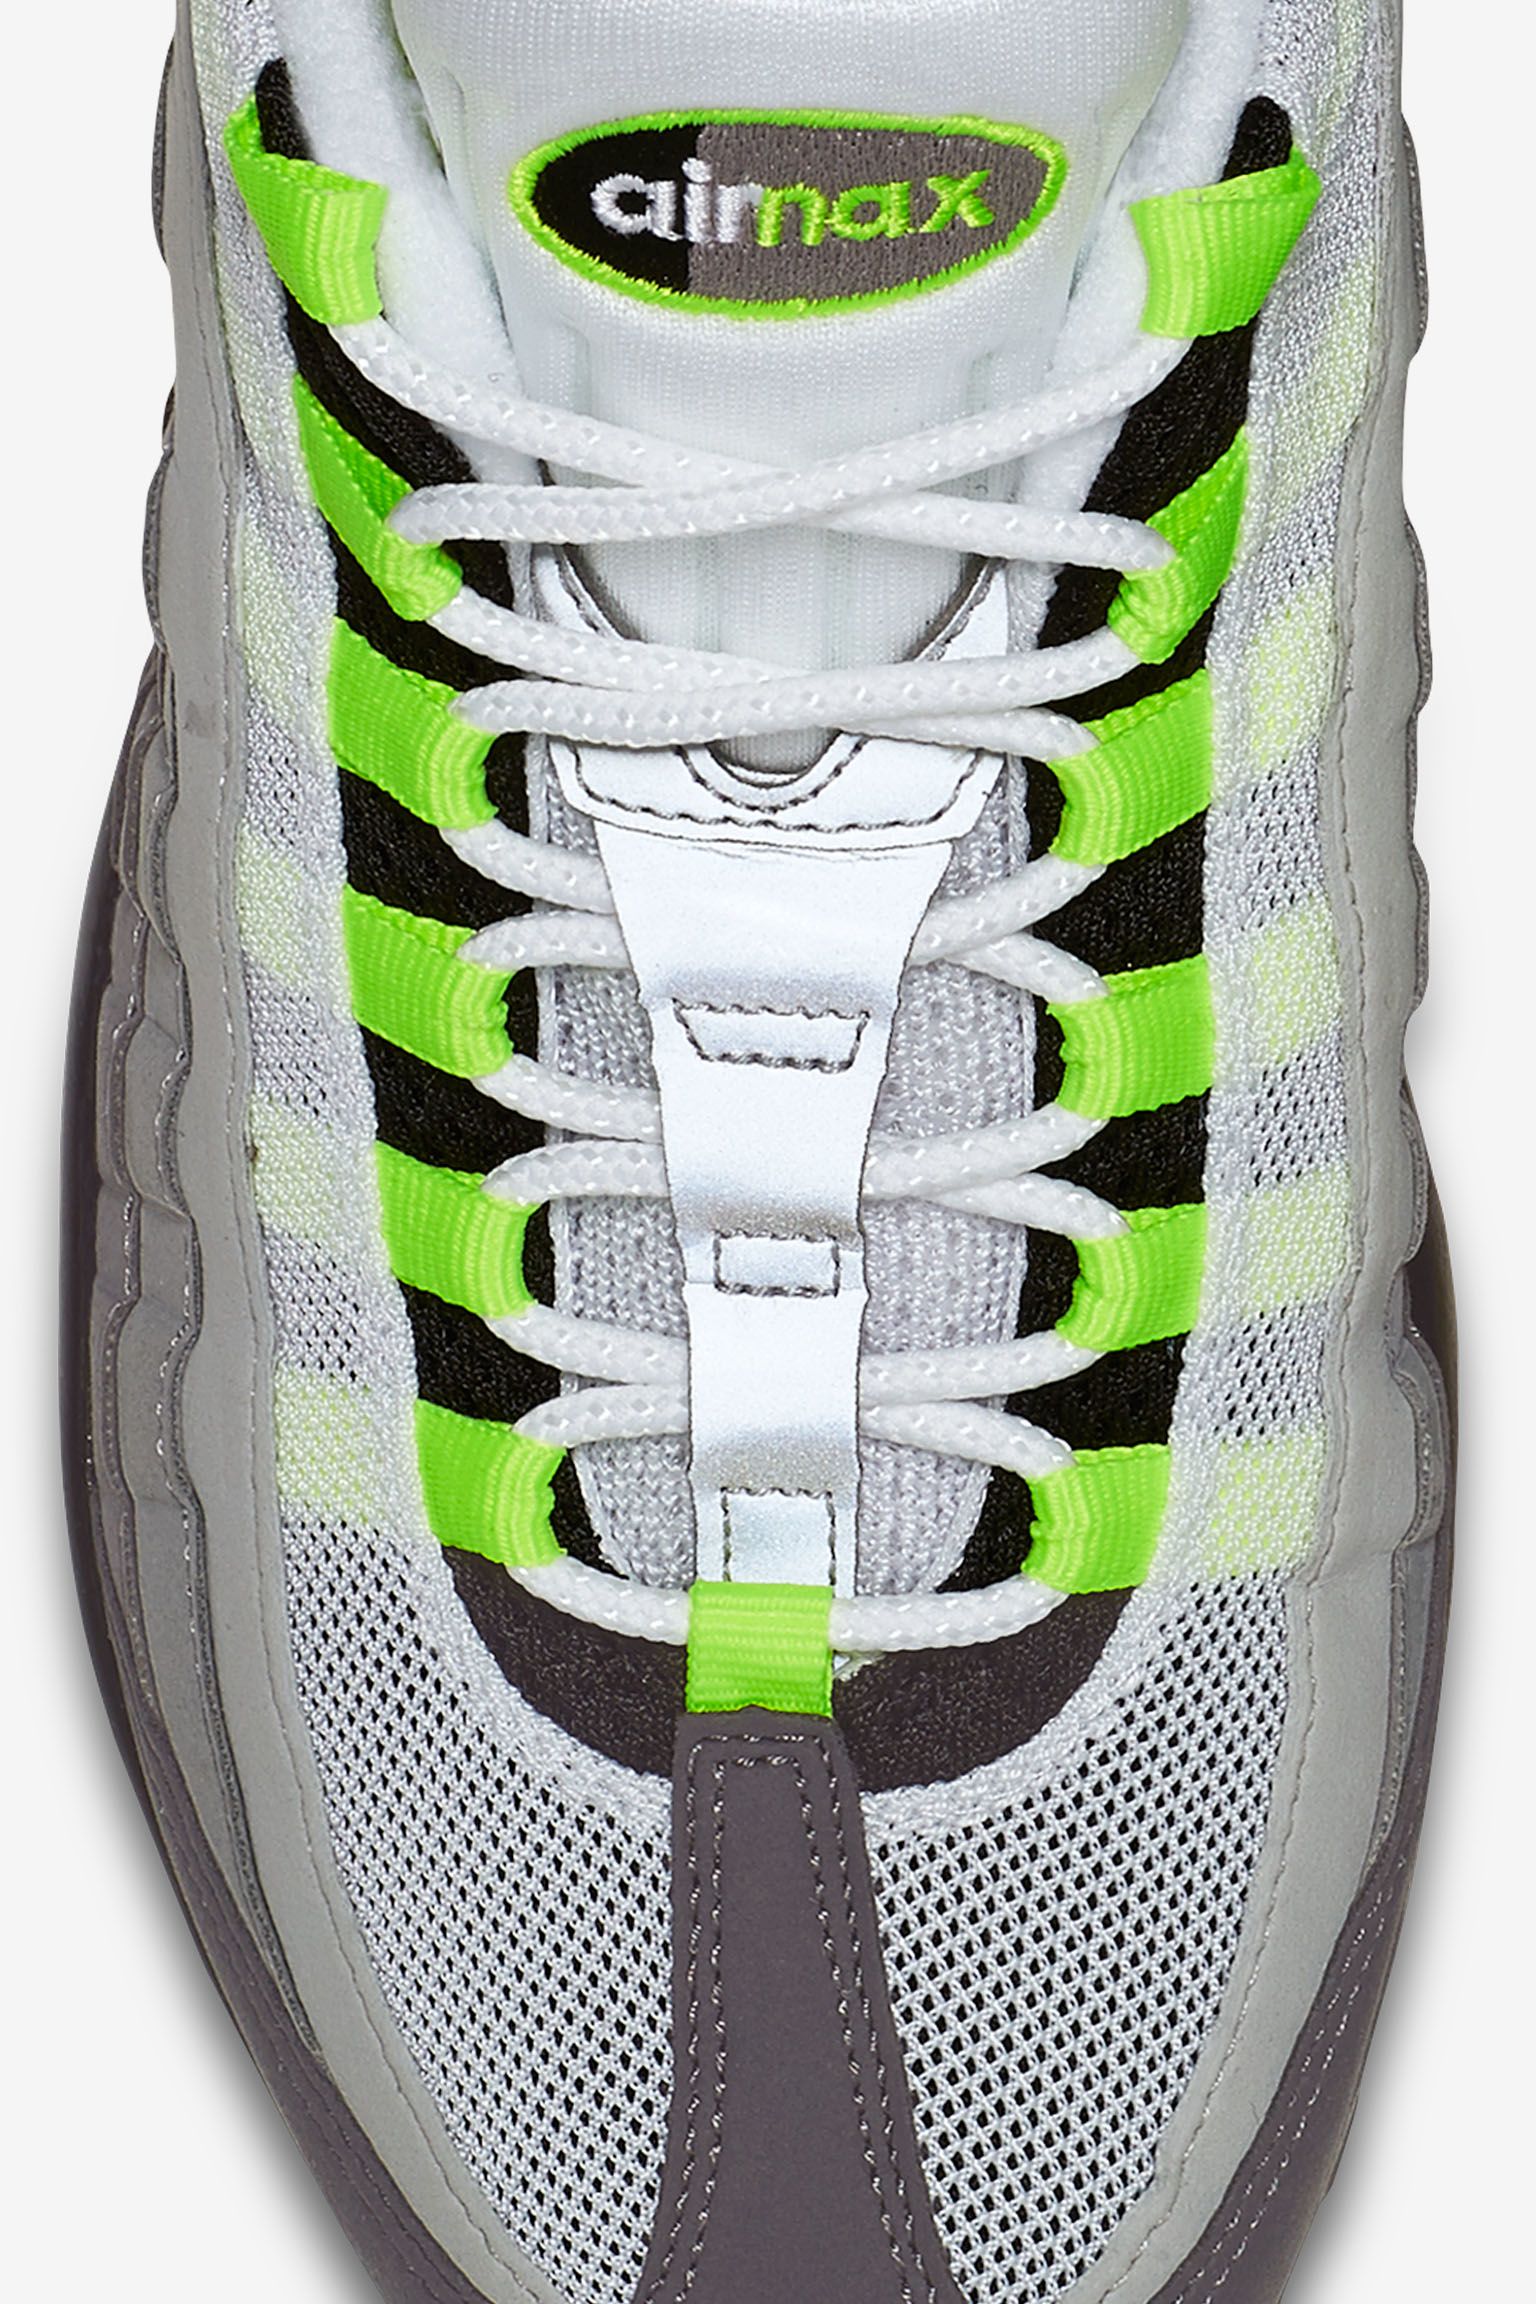 كريم نيتروجينا للعين Nike Air Max 95 'Neon'. Nike SNKRS كريم نيتروجينا للعين